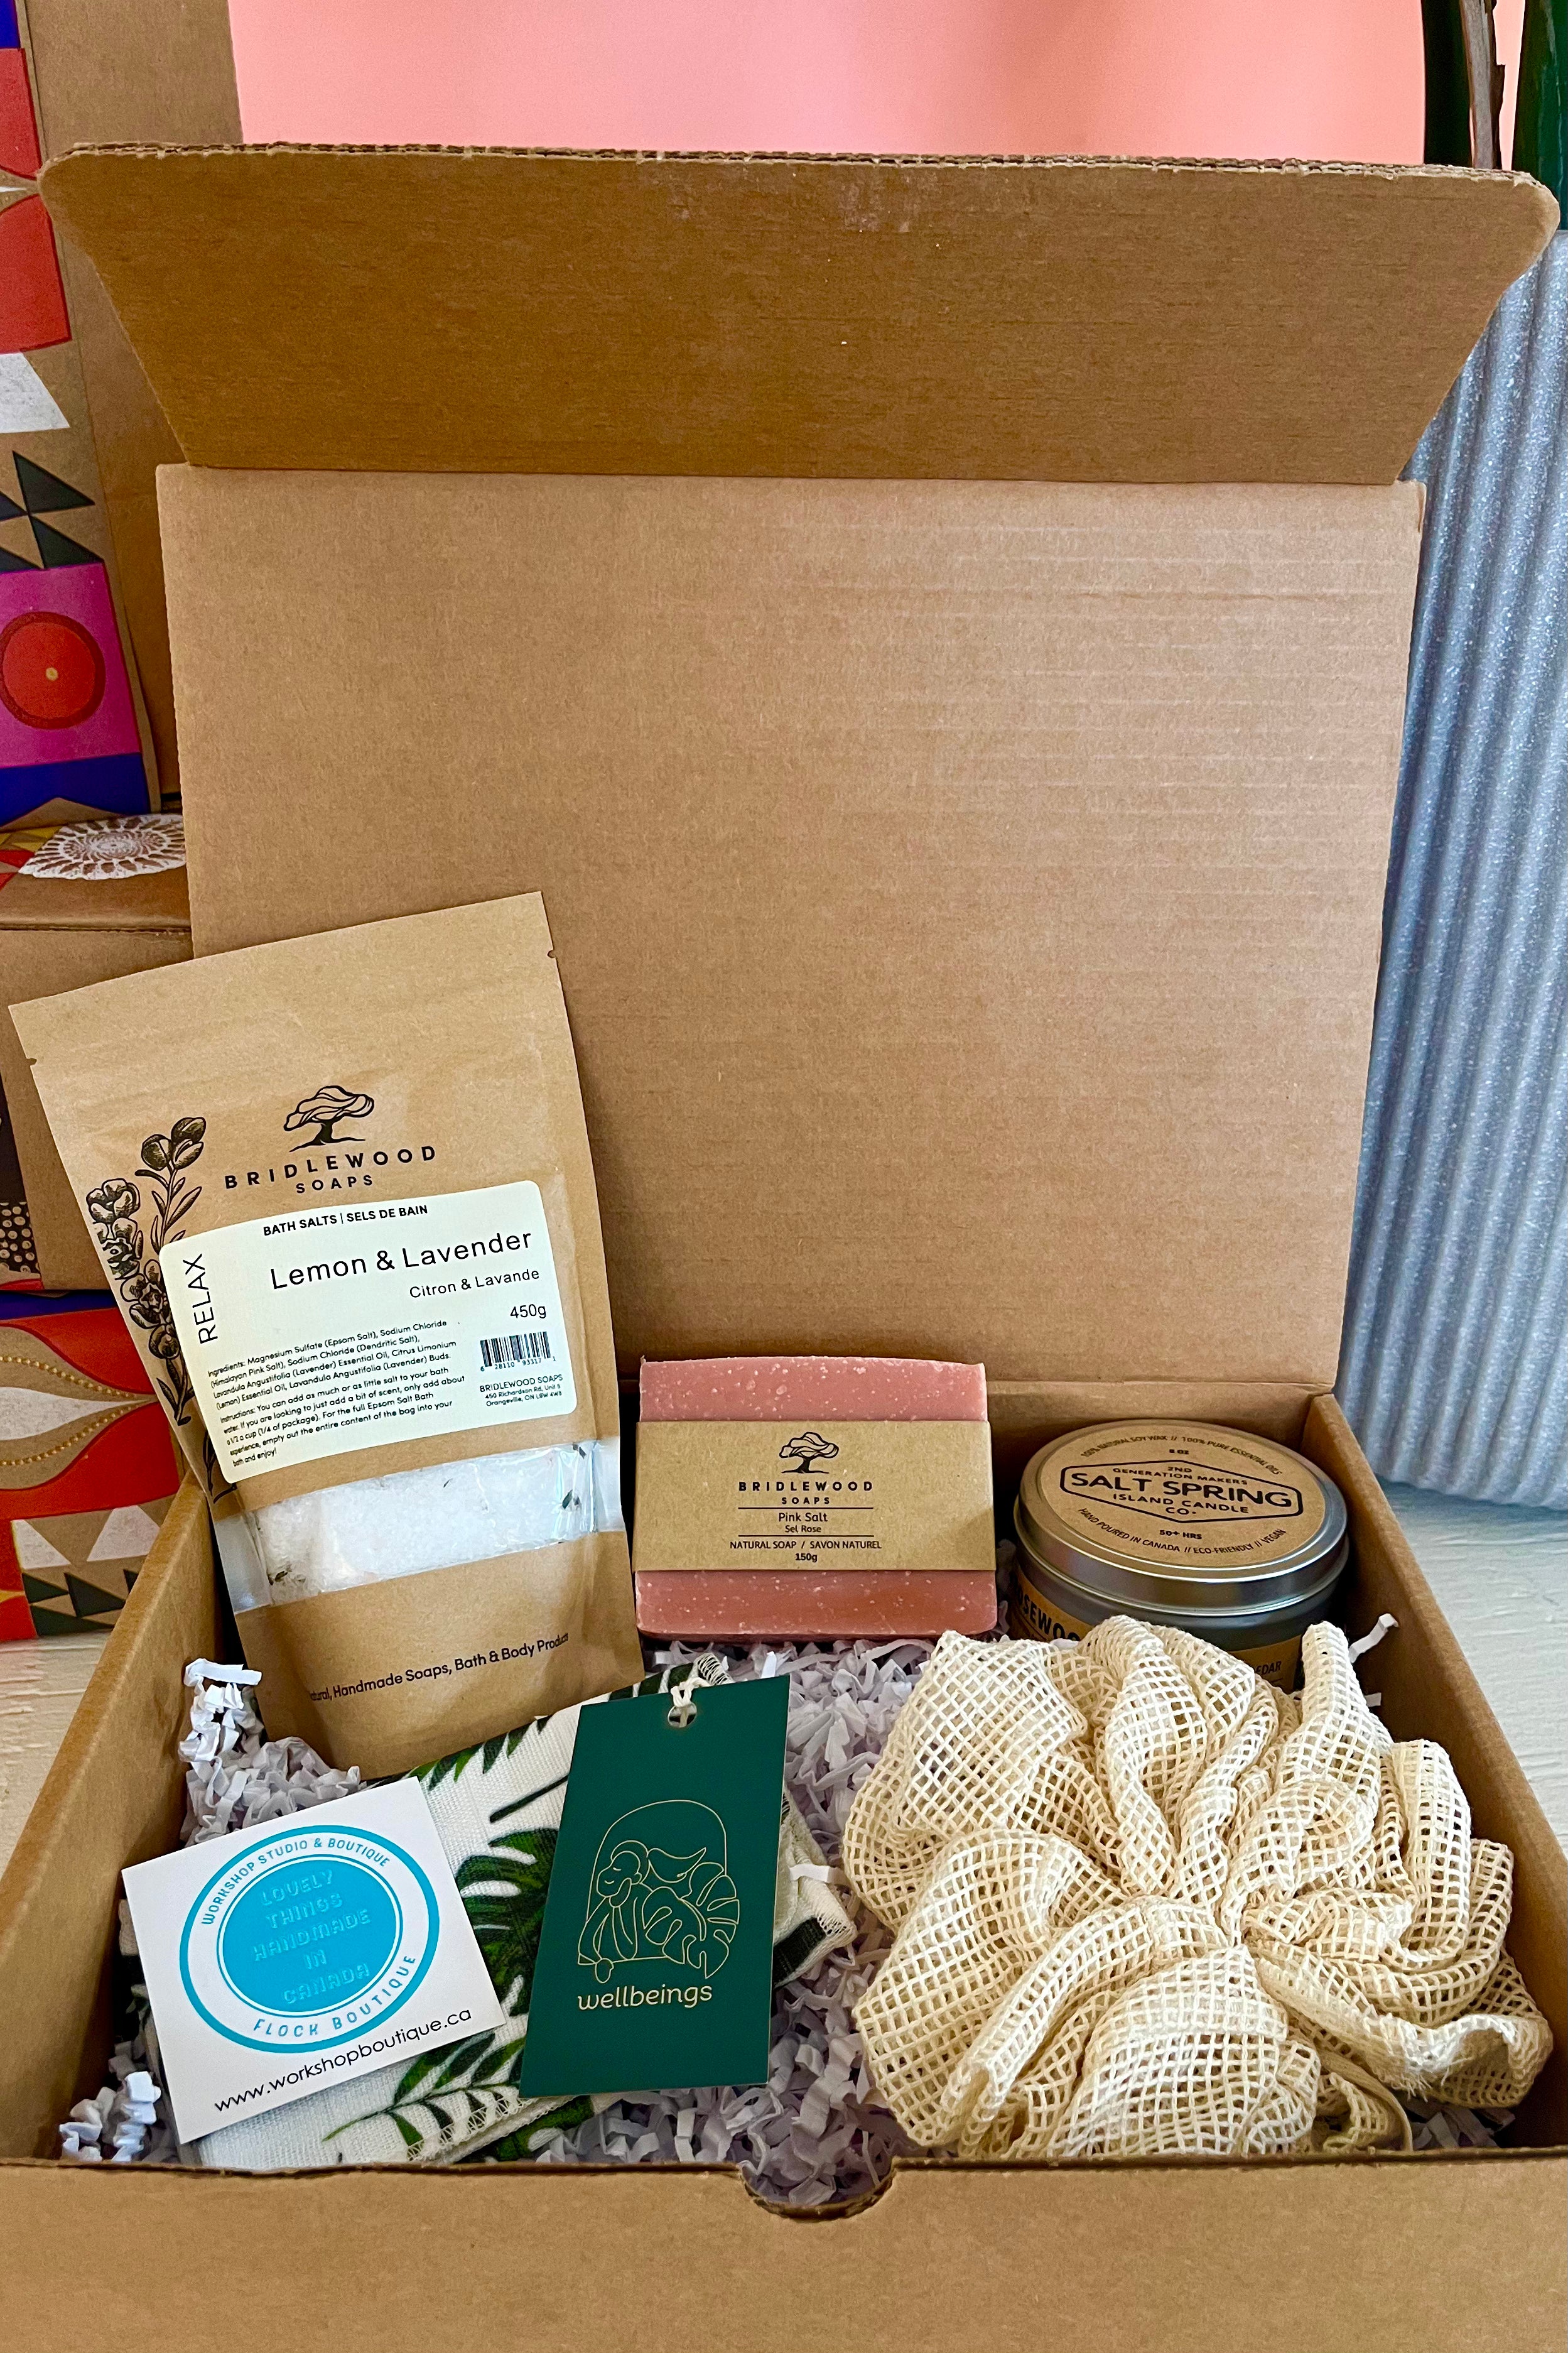 Relax Gift Box